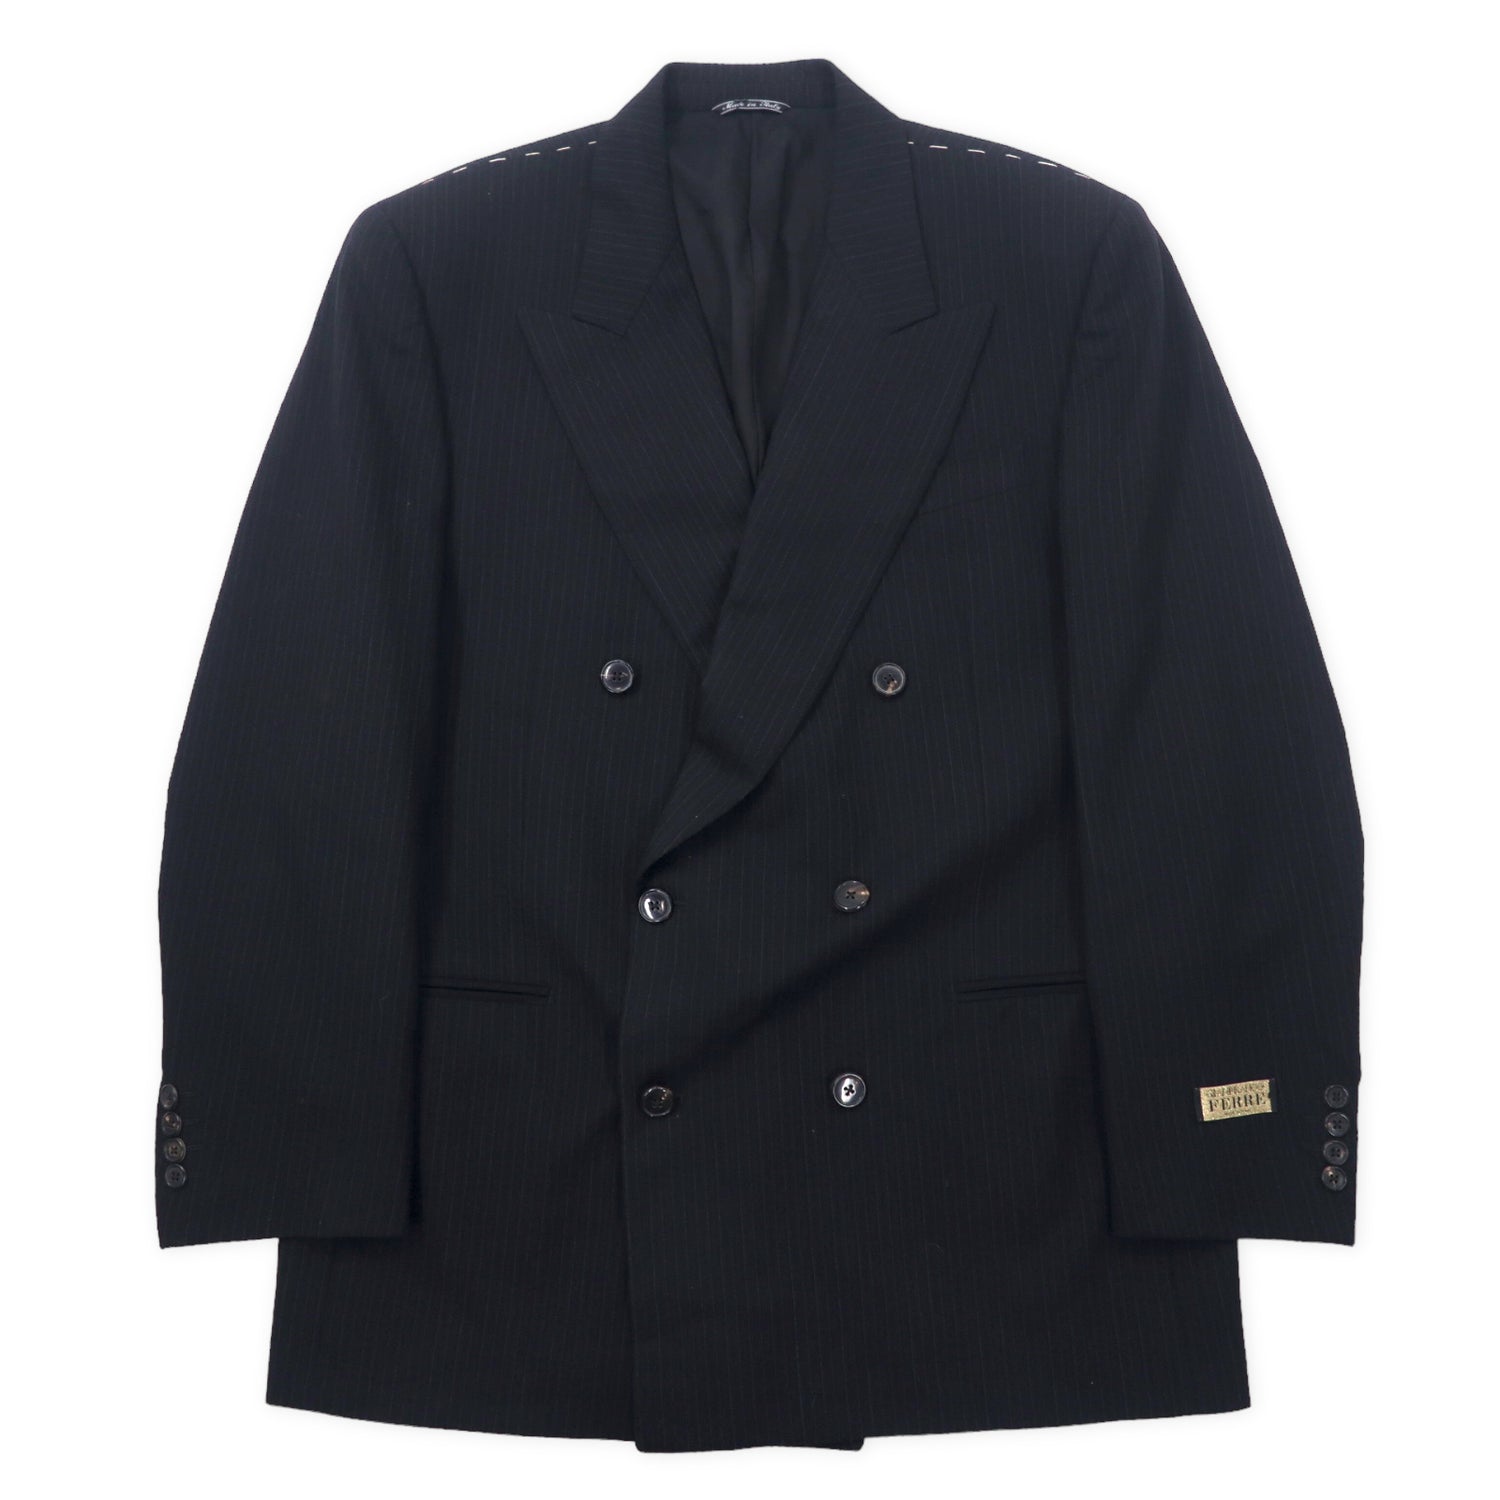 Gianfranco Ferre 80's Italian MADE Double Tailored Jacket 52 Black 